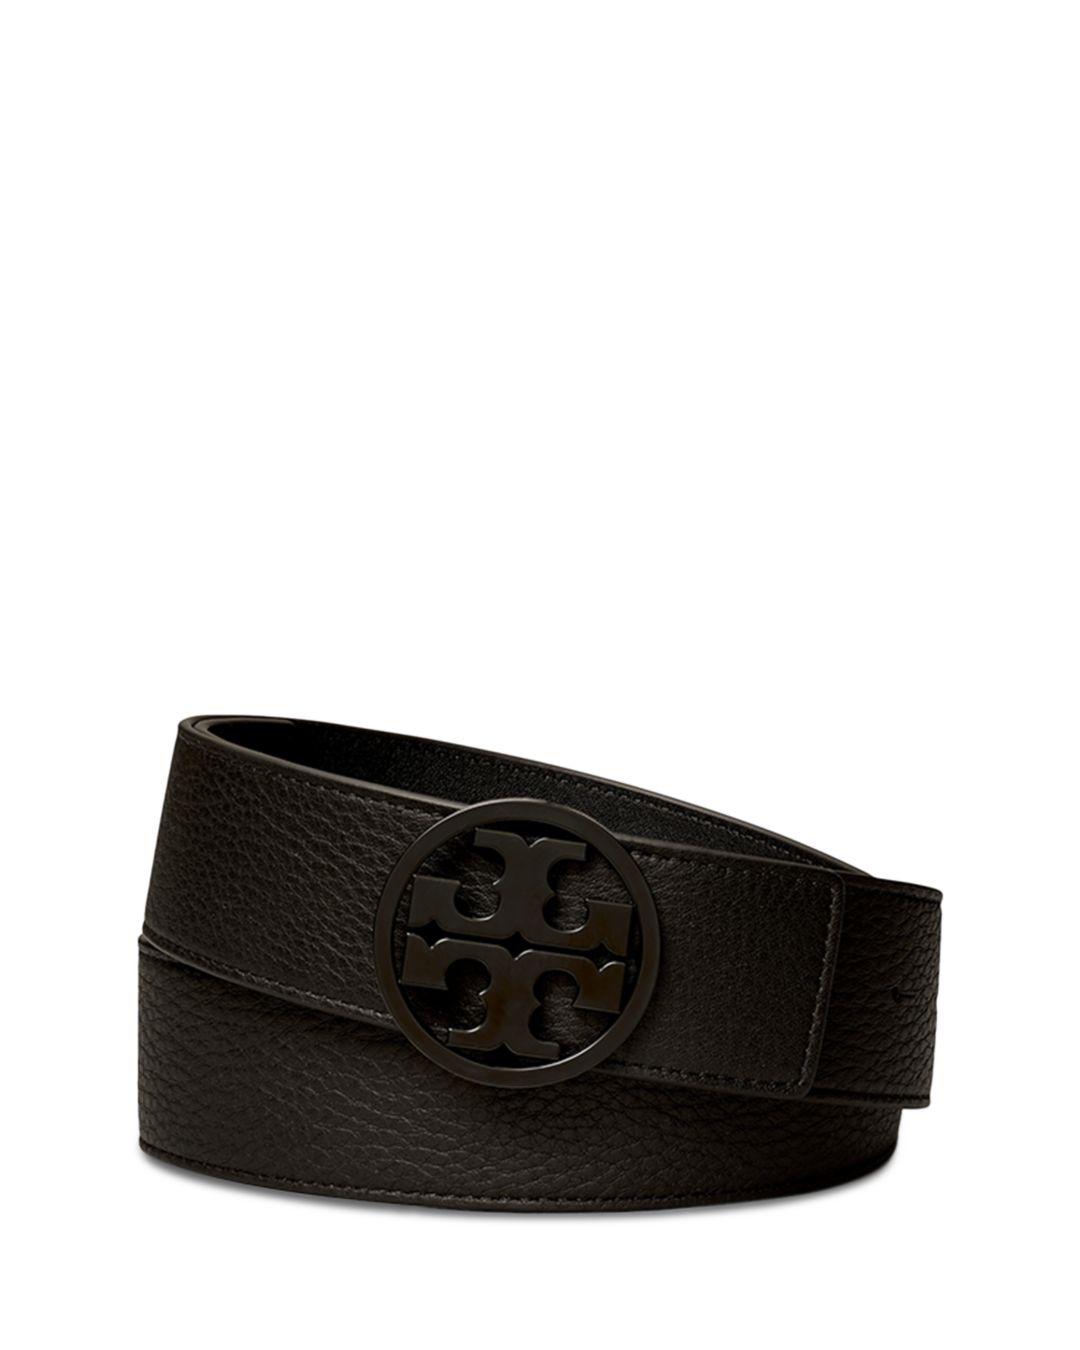 Tory Burch Miller Powder Coated Logo Leather Belt in Black | Lyst